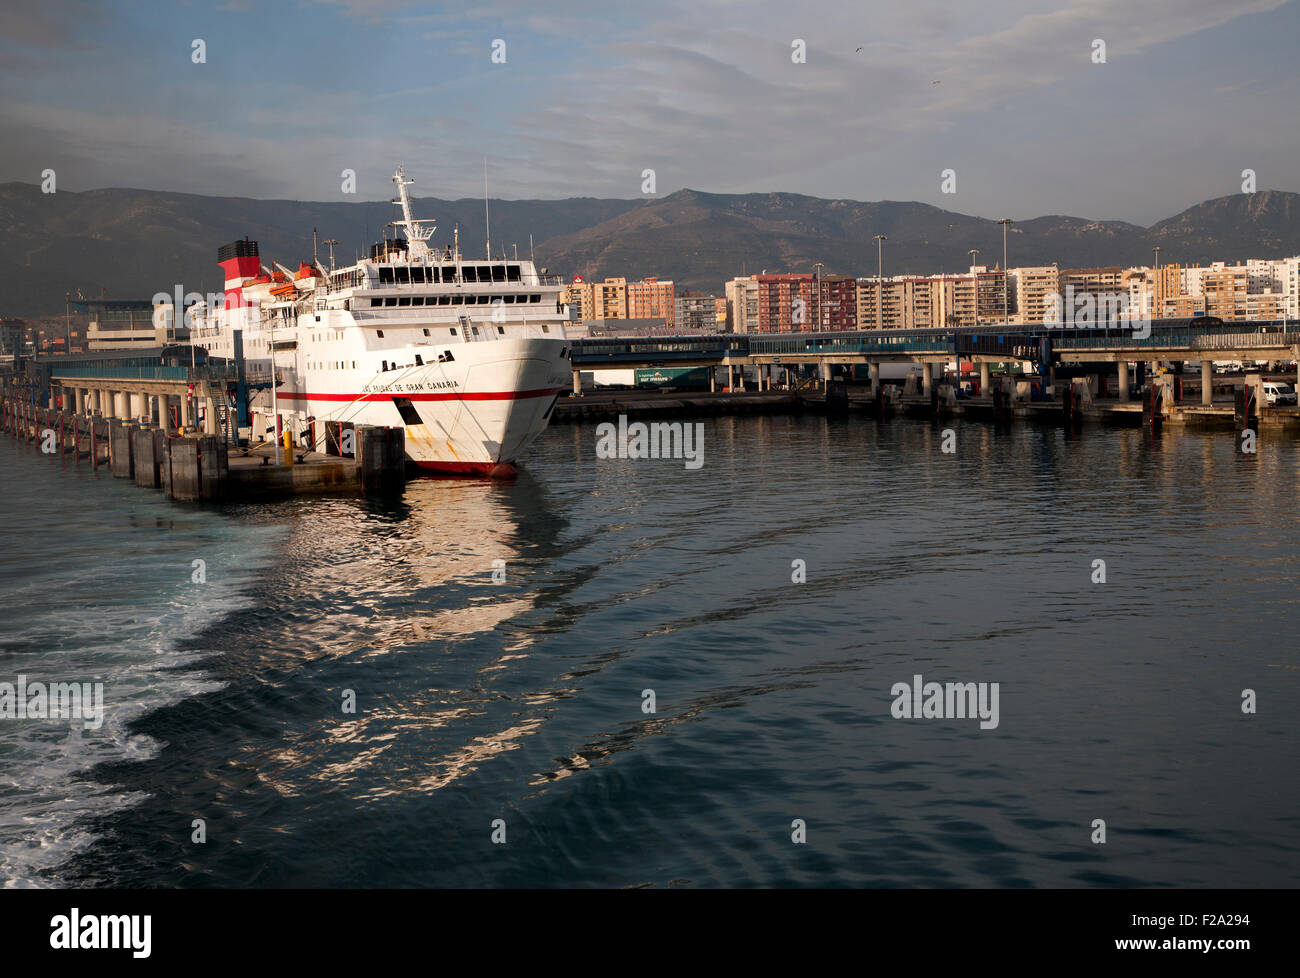 Ferries at ferry terminal at port of algeciras fotografías e imágenes de  alta resolución - Alamy